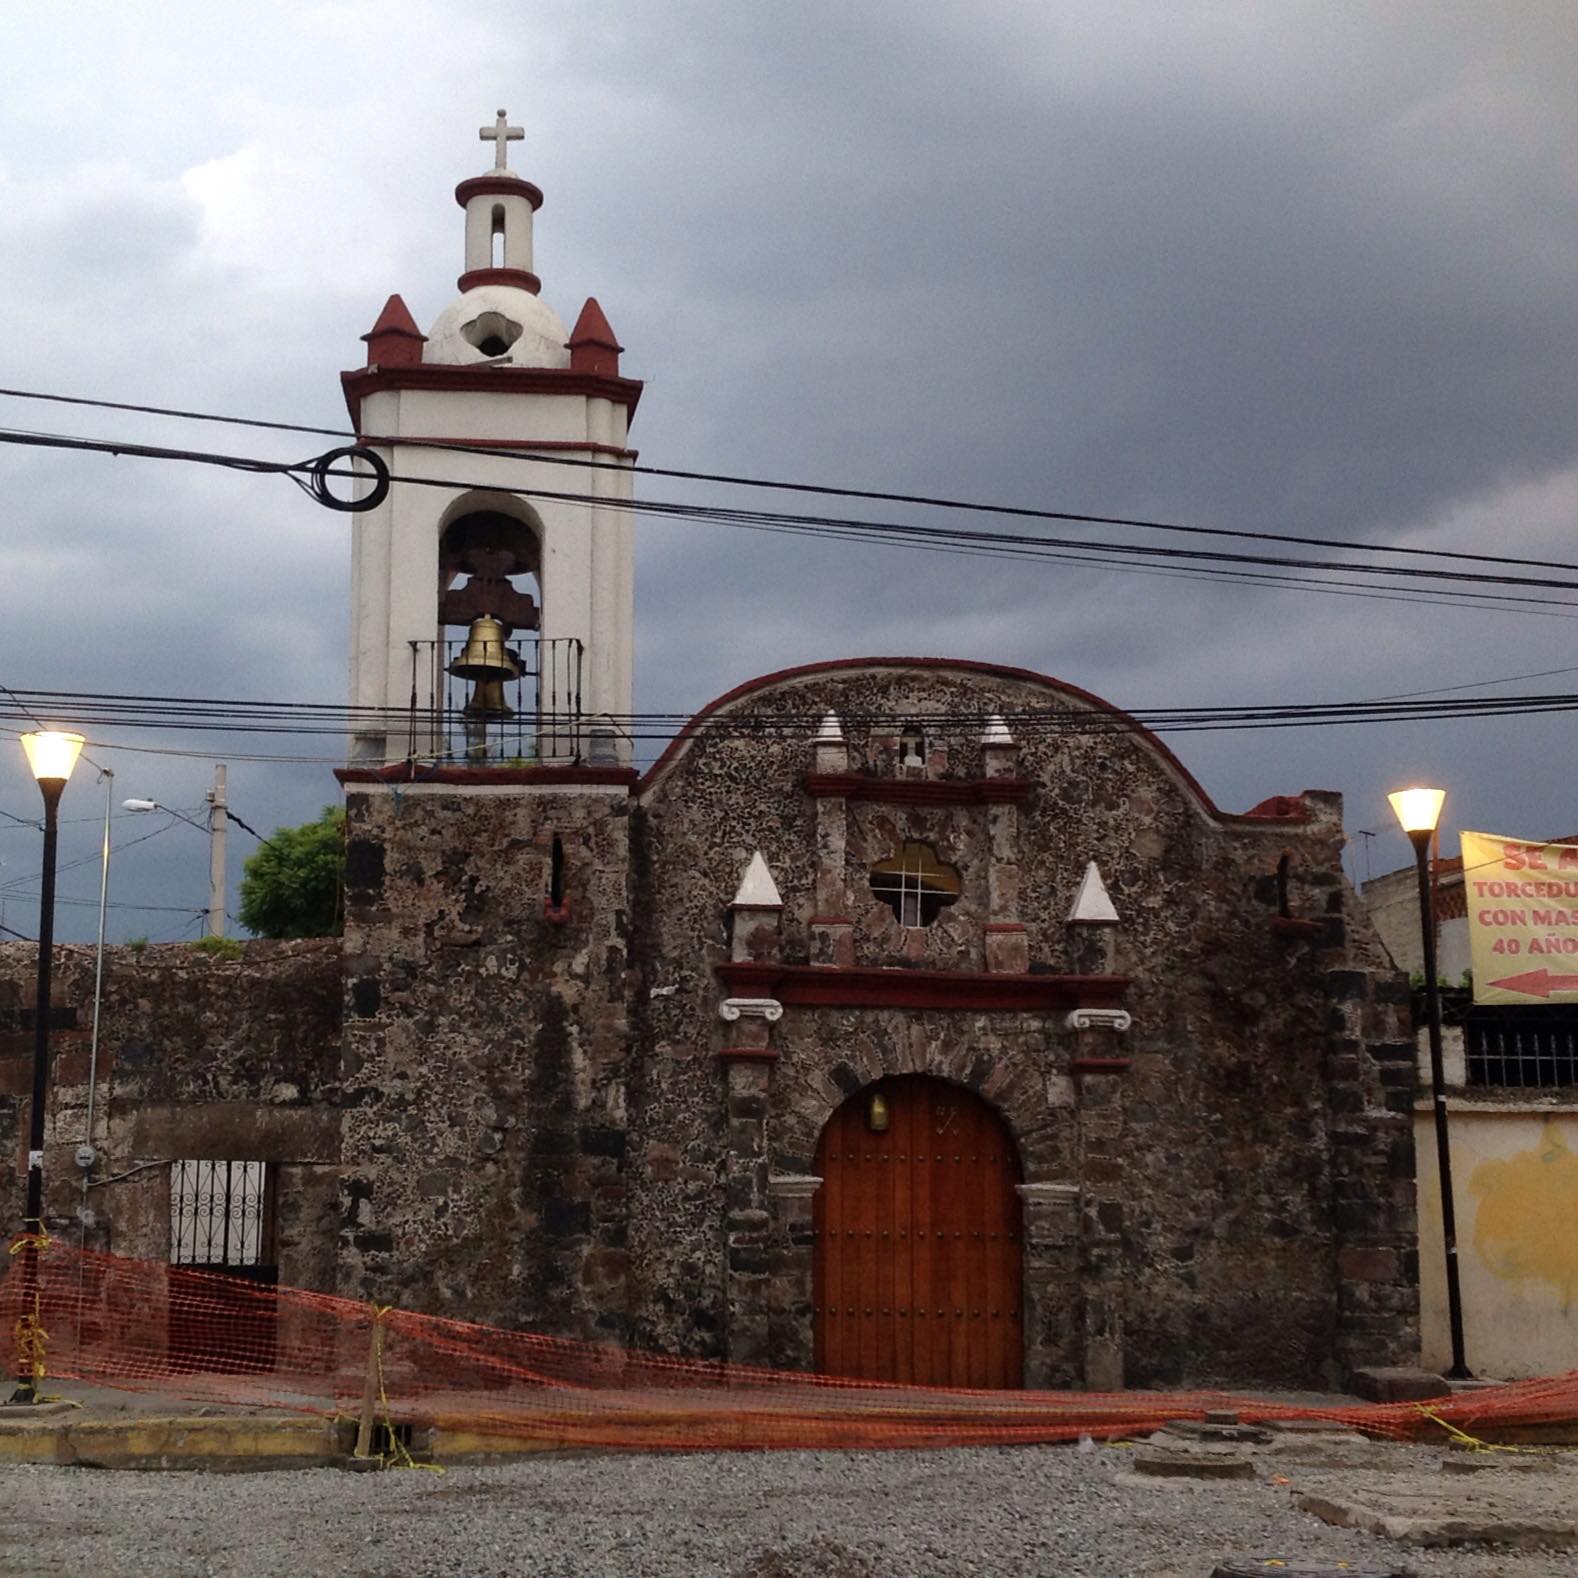 Entrada principal de la iglesia de San Pedro Apóstol  en Xochimilco.
Fotos:
Facebook/Iglesia de San Pedro Apóstol